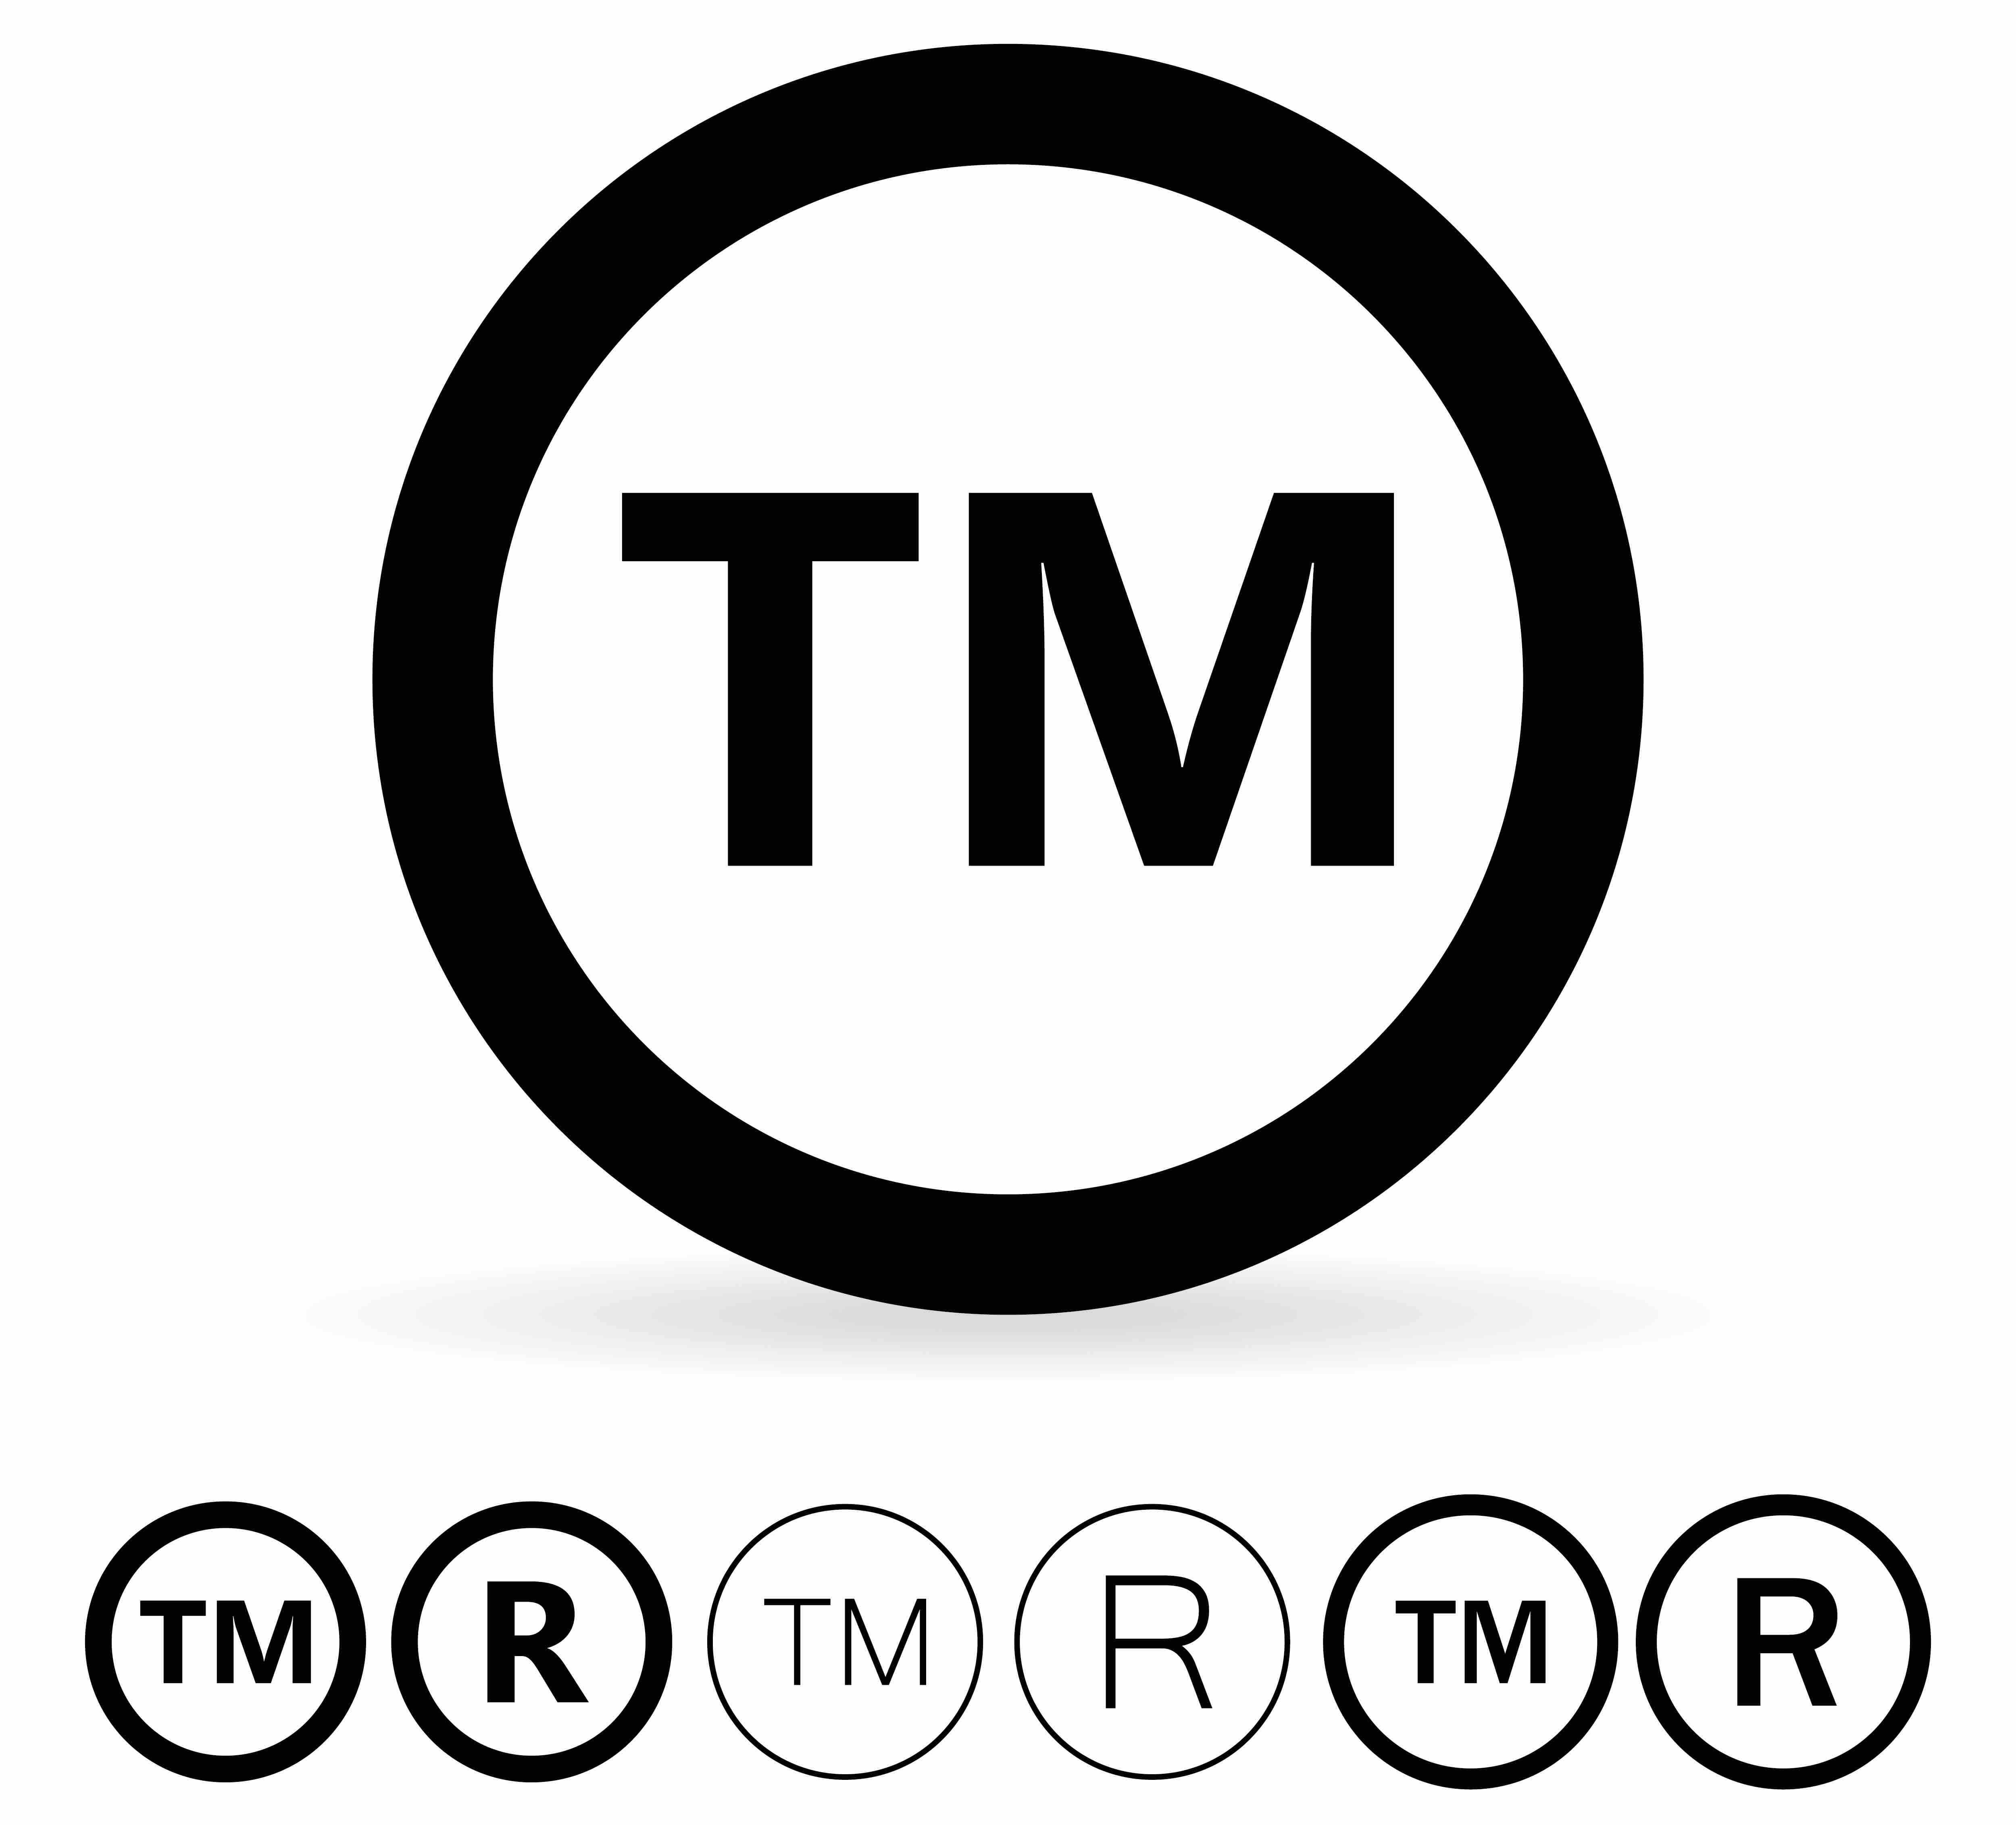 Registered Logo - How to use trademark and registered trademark symbols - Cooper Mills